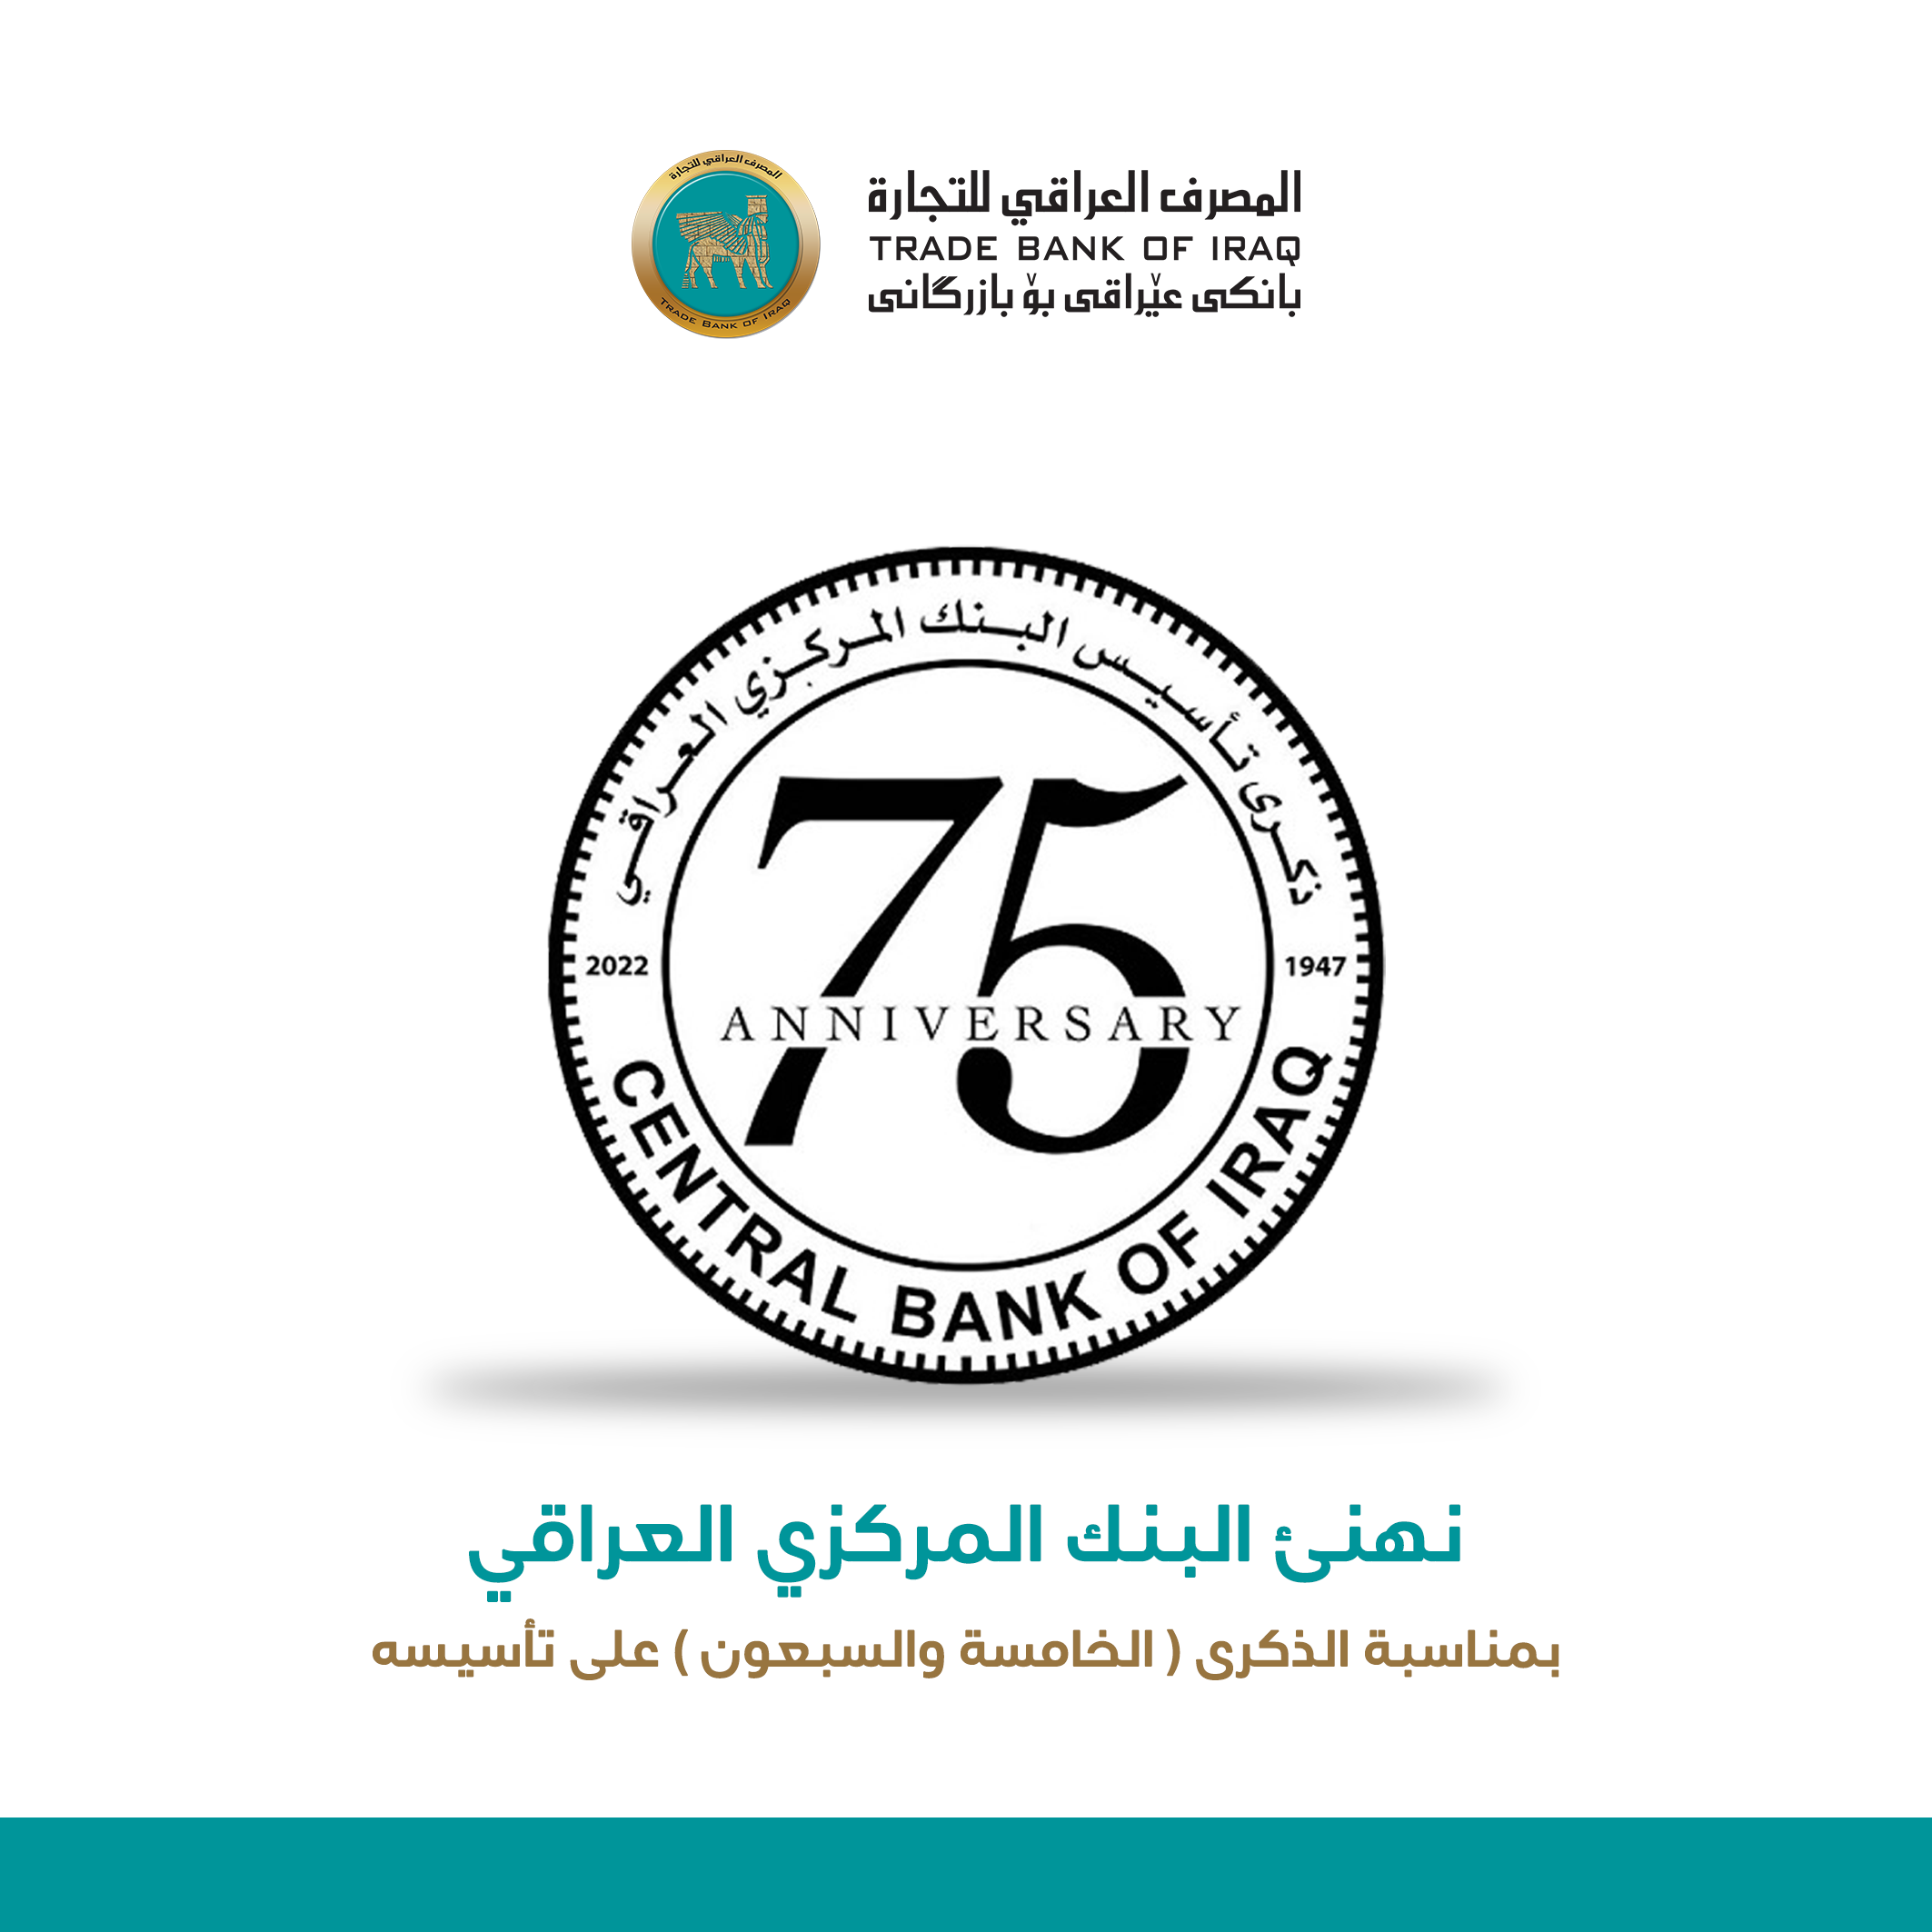 Trade Bank of Iraq congratulates the Central Bank of Iraq (CBI)